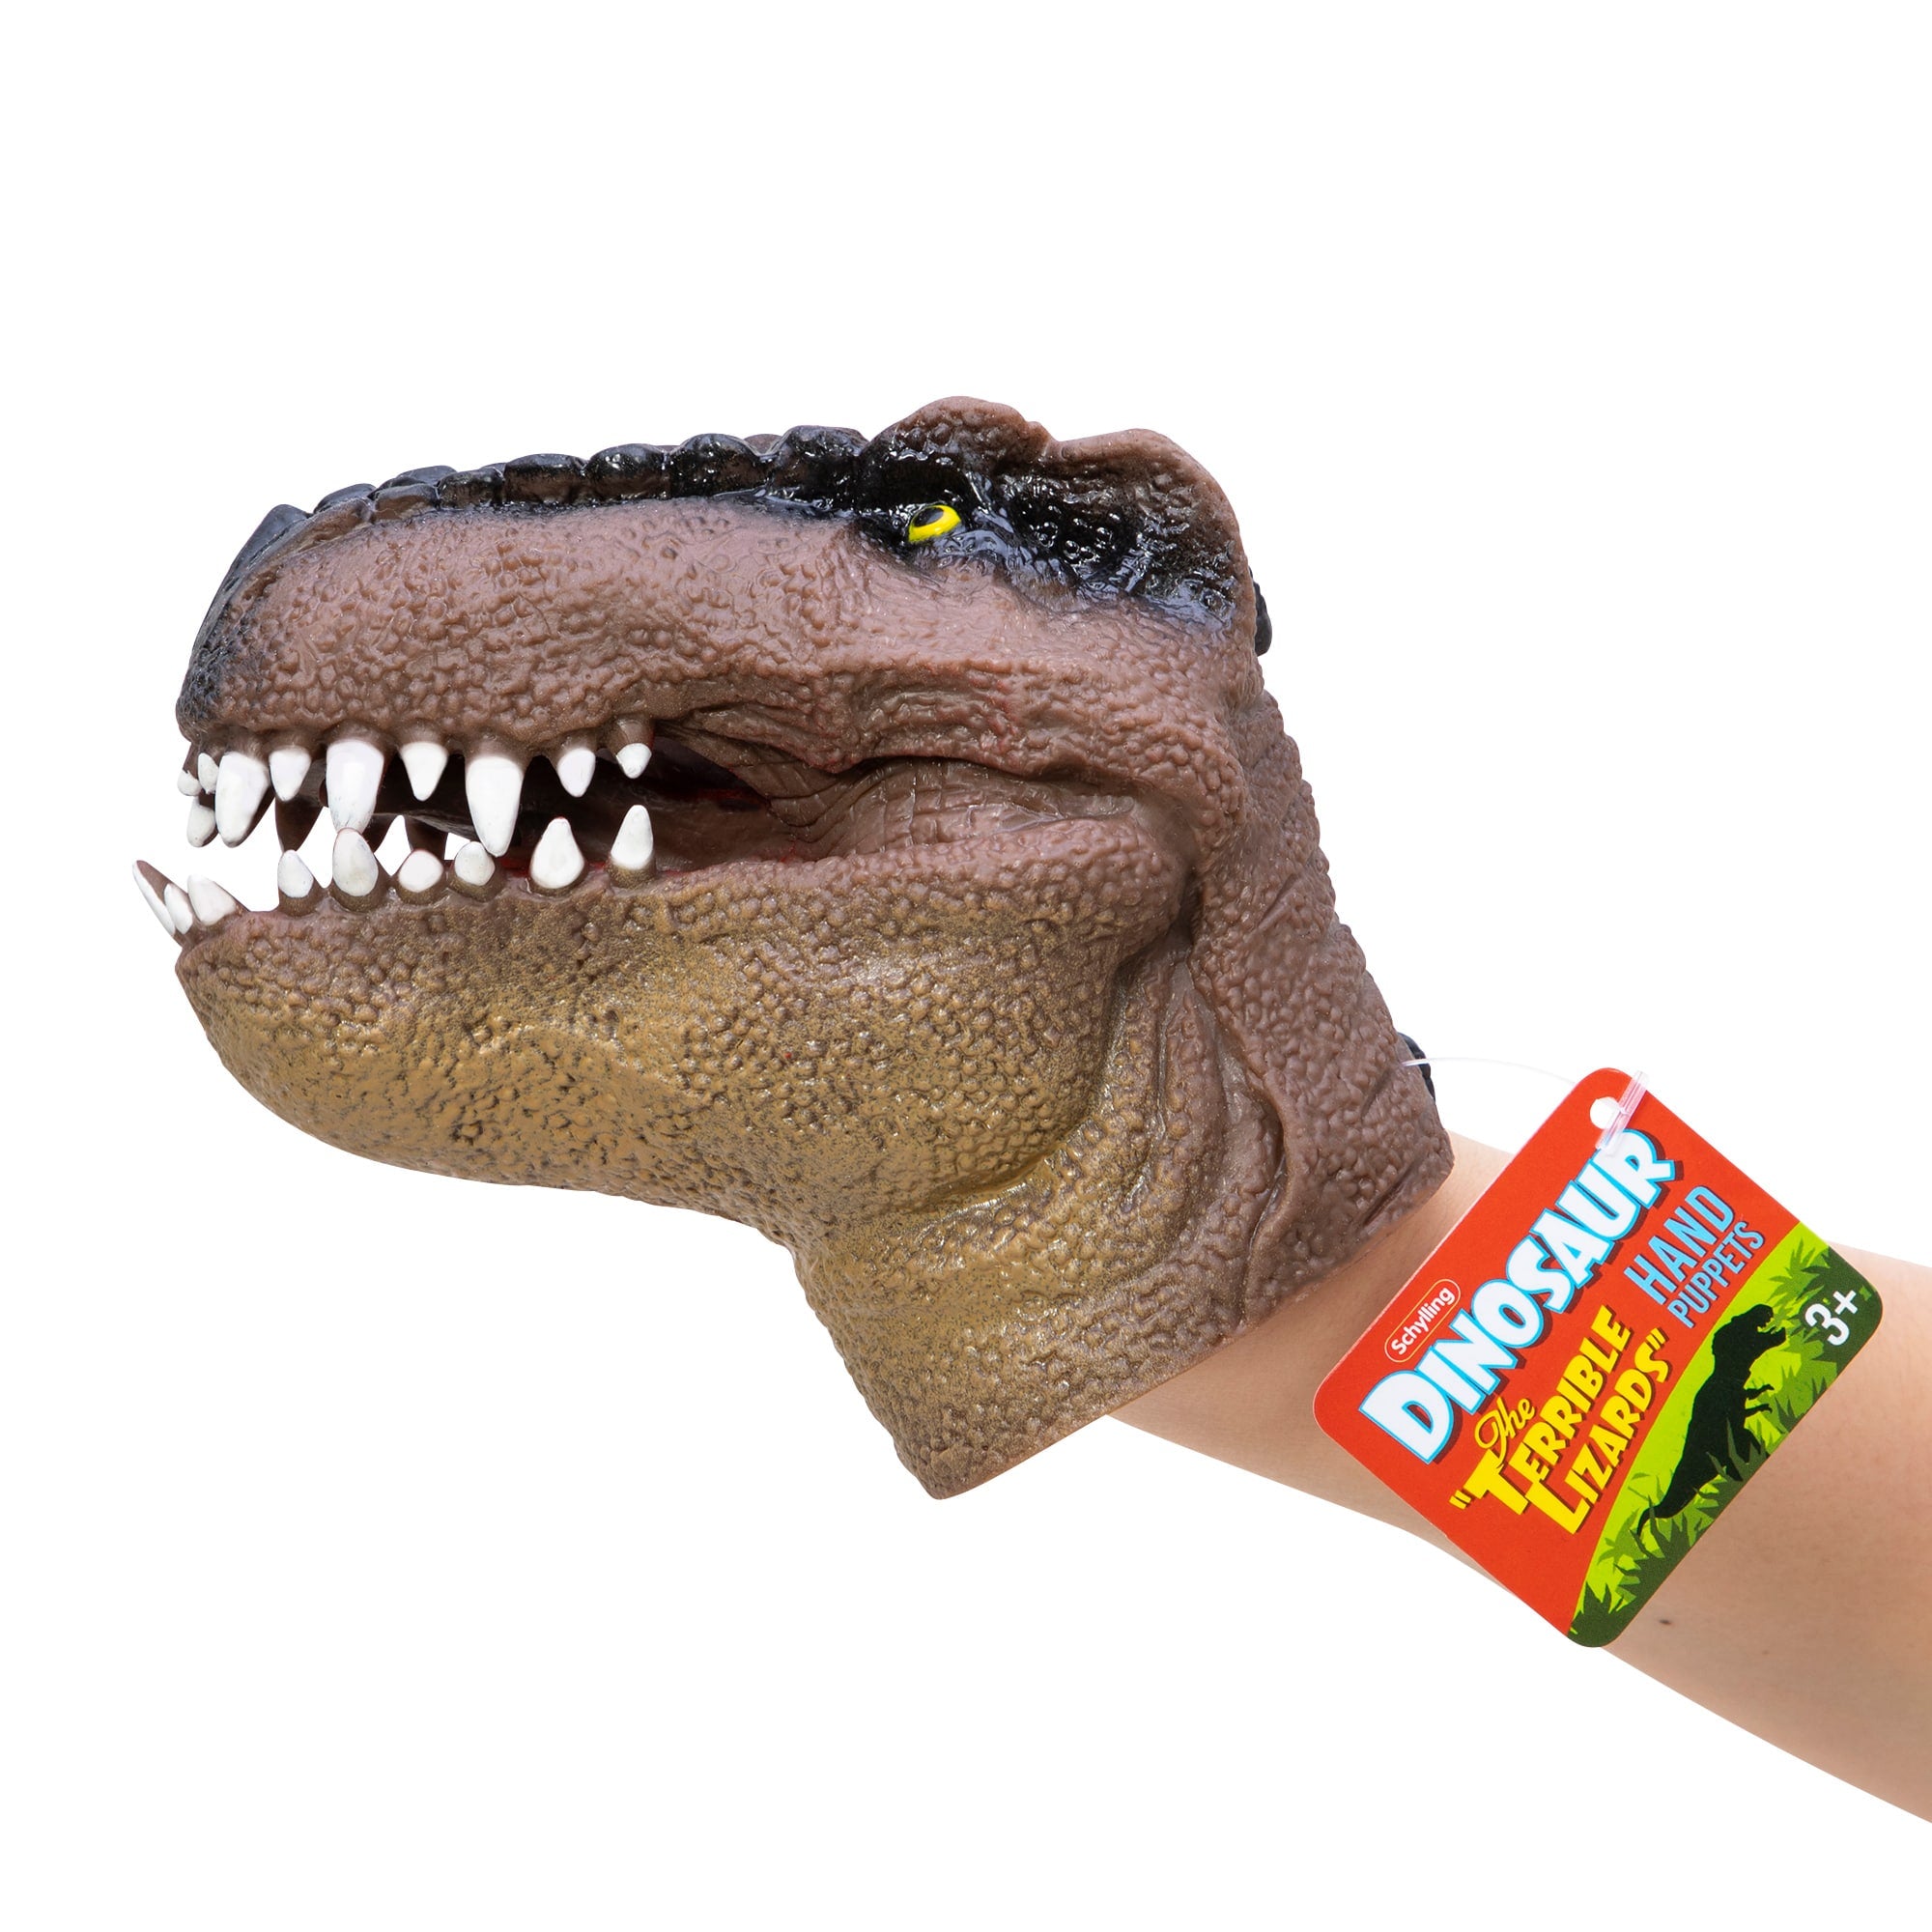 Tyrannosaurus Rex - T-Rex Hand Sanitizer Holder Key Fob & Snap Tab -  Designs by Little Bee